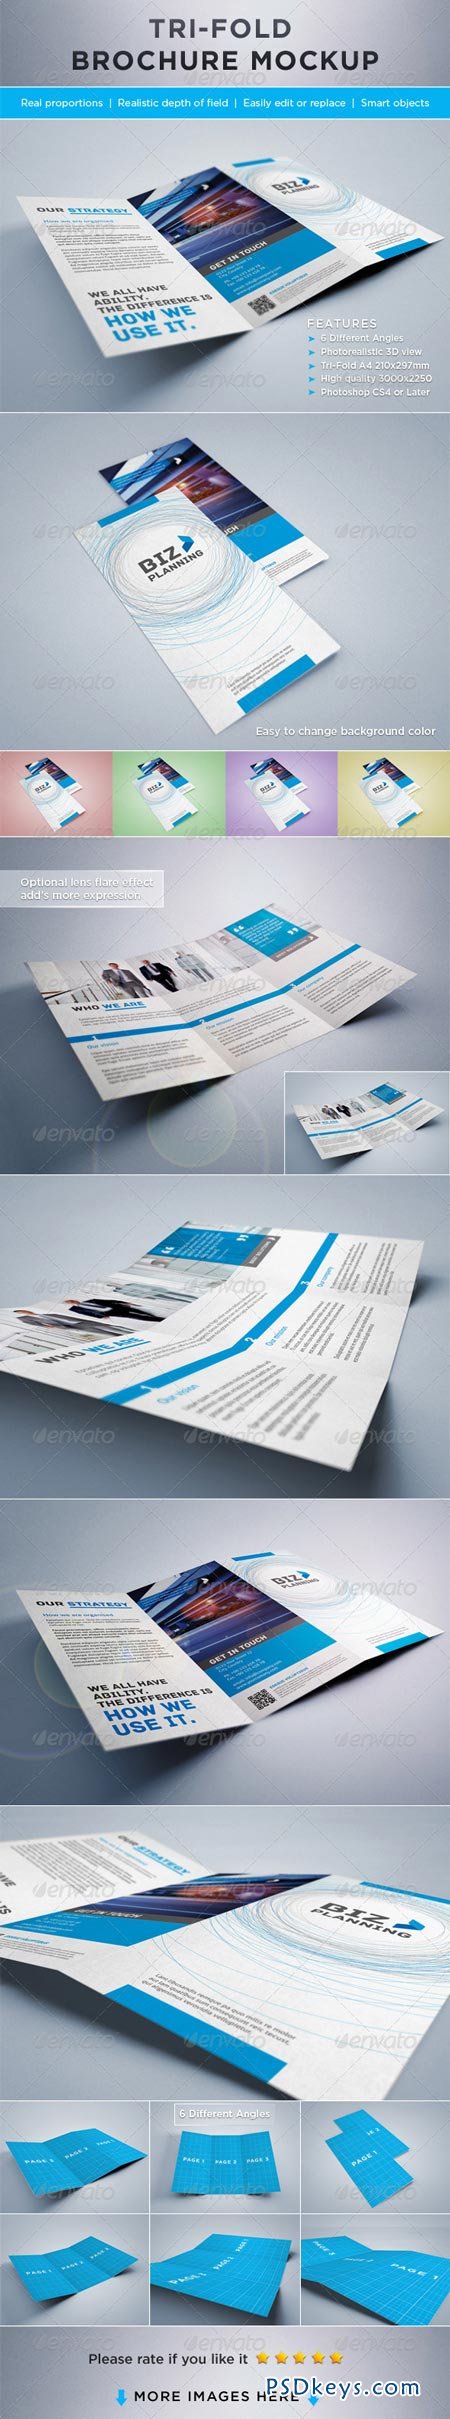 Photorealistic Tri-Fold Brochure Mock-ups 2206979